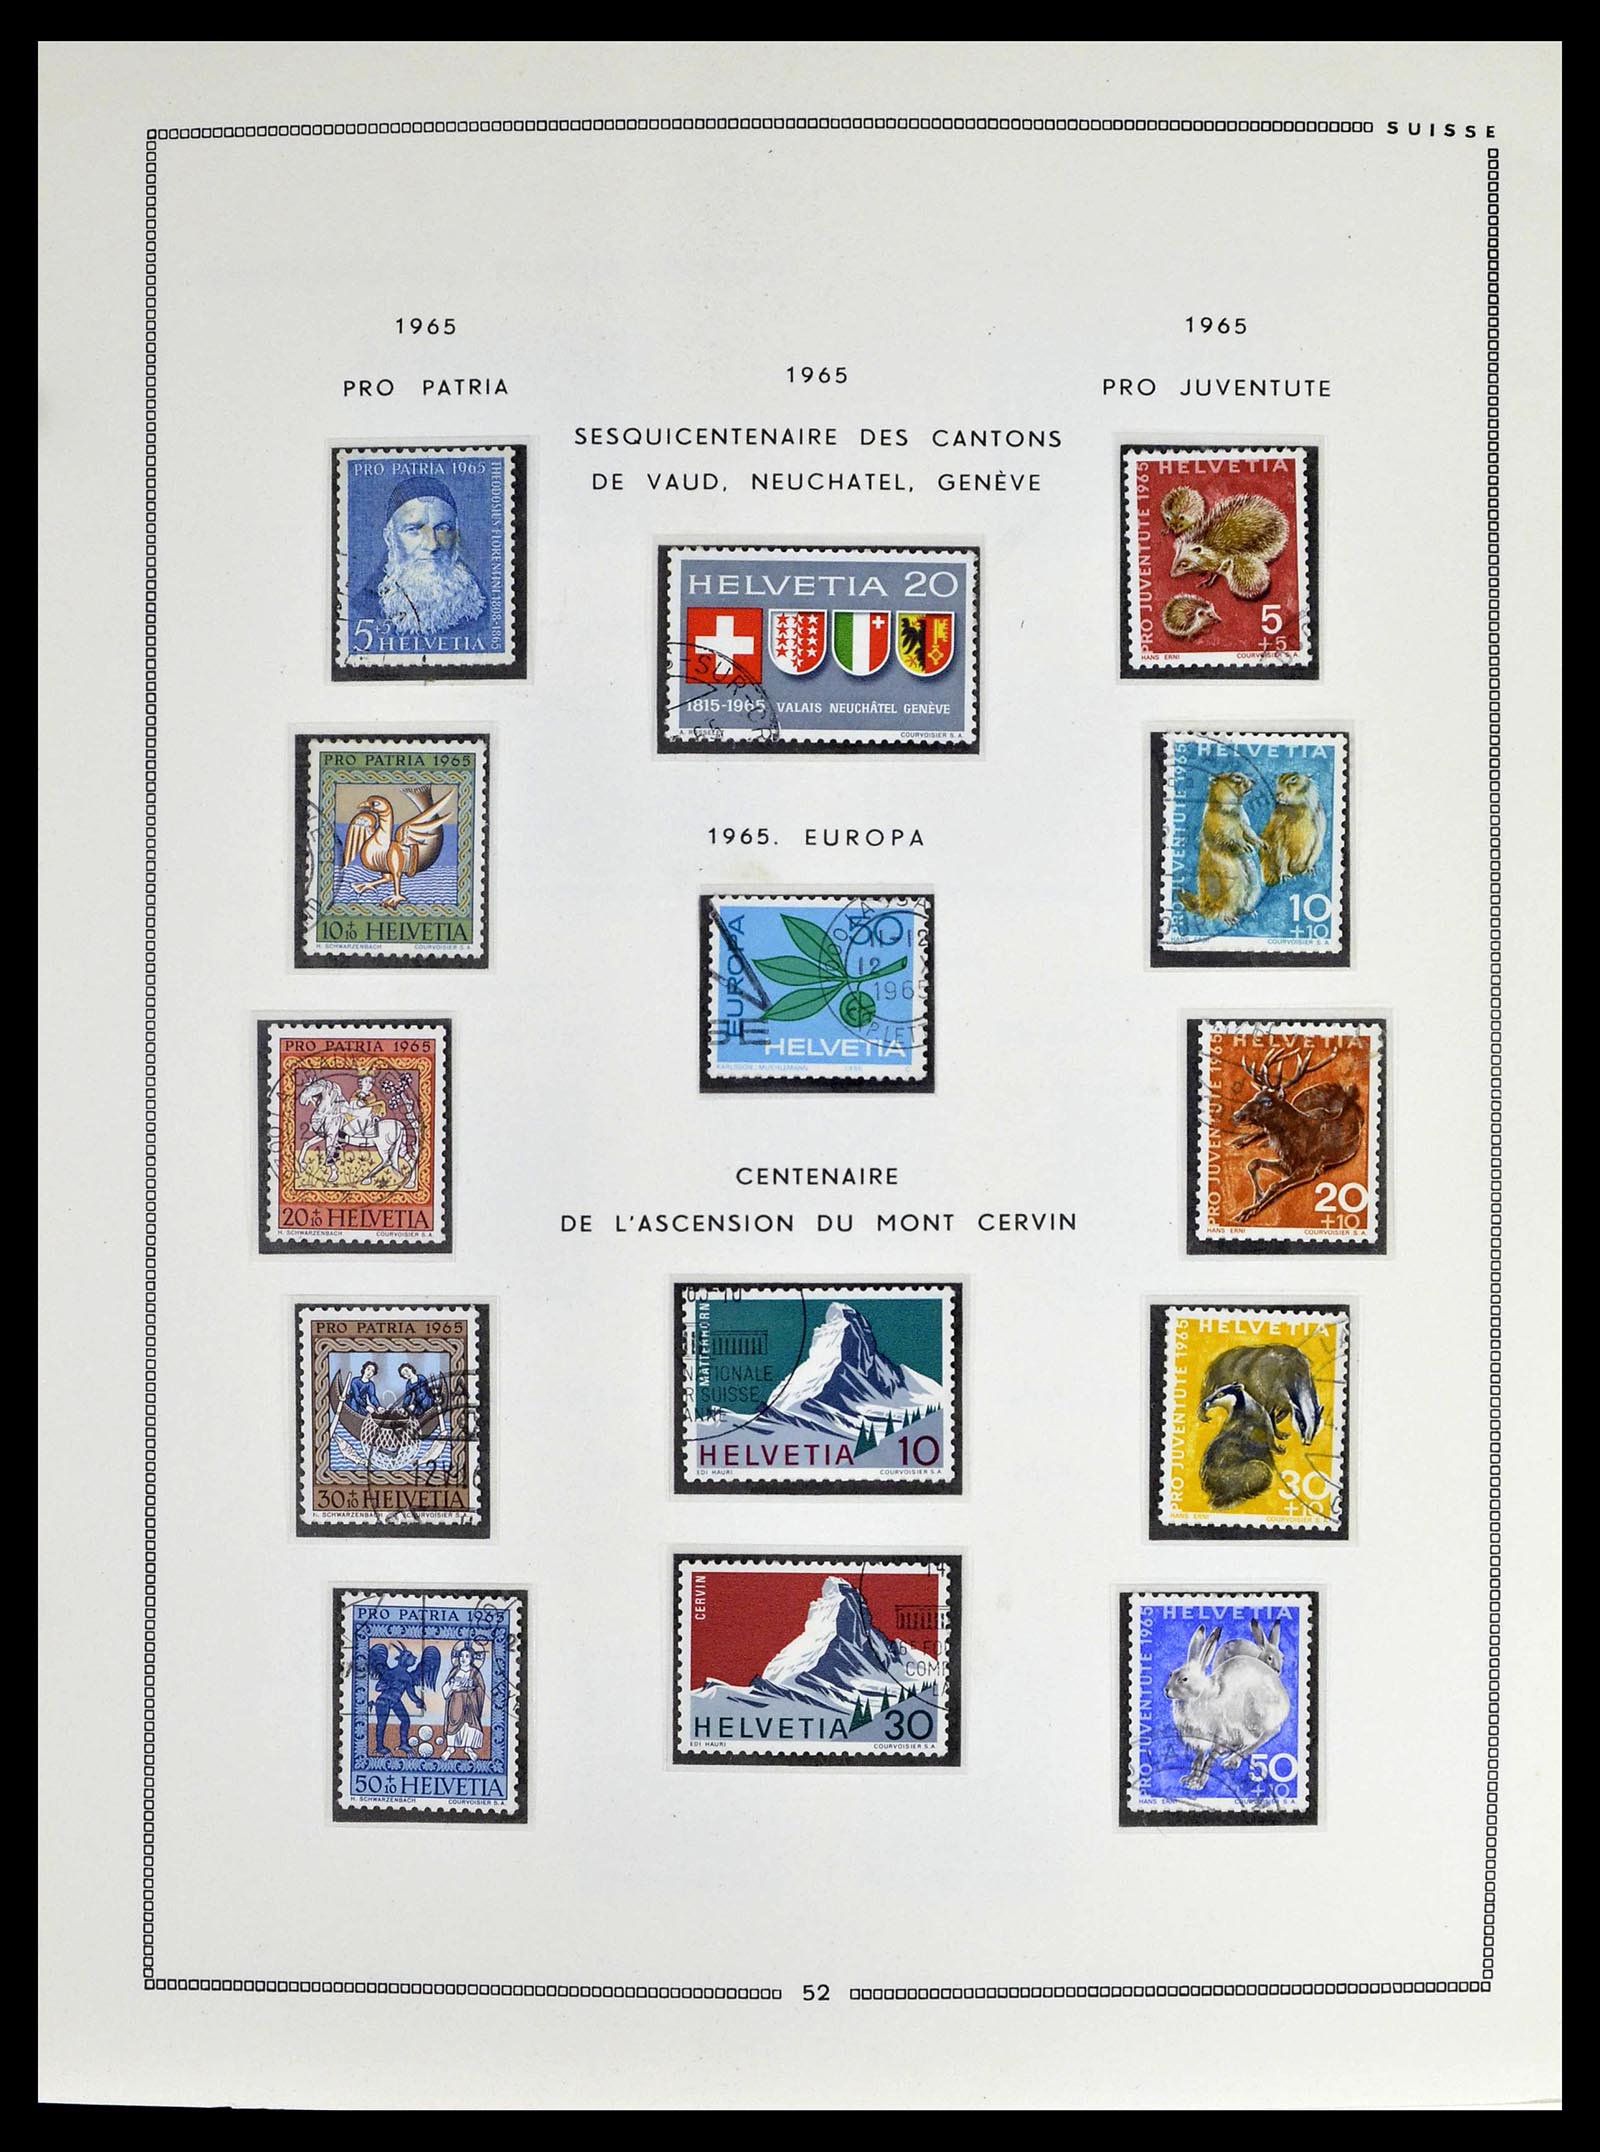 39094 0050 - Stamp collection 39094 Switzerland 1850-2005.